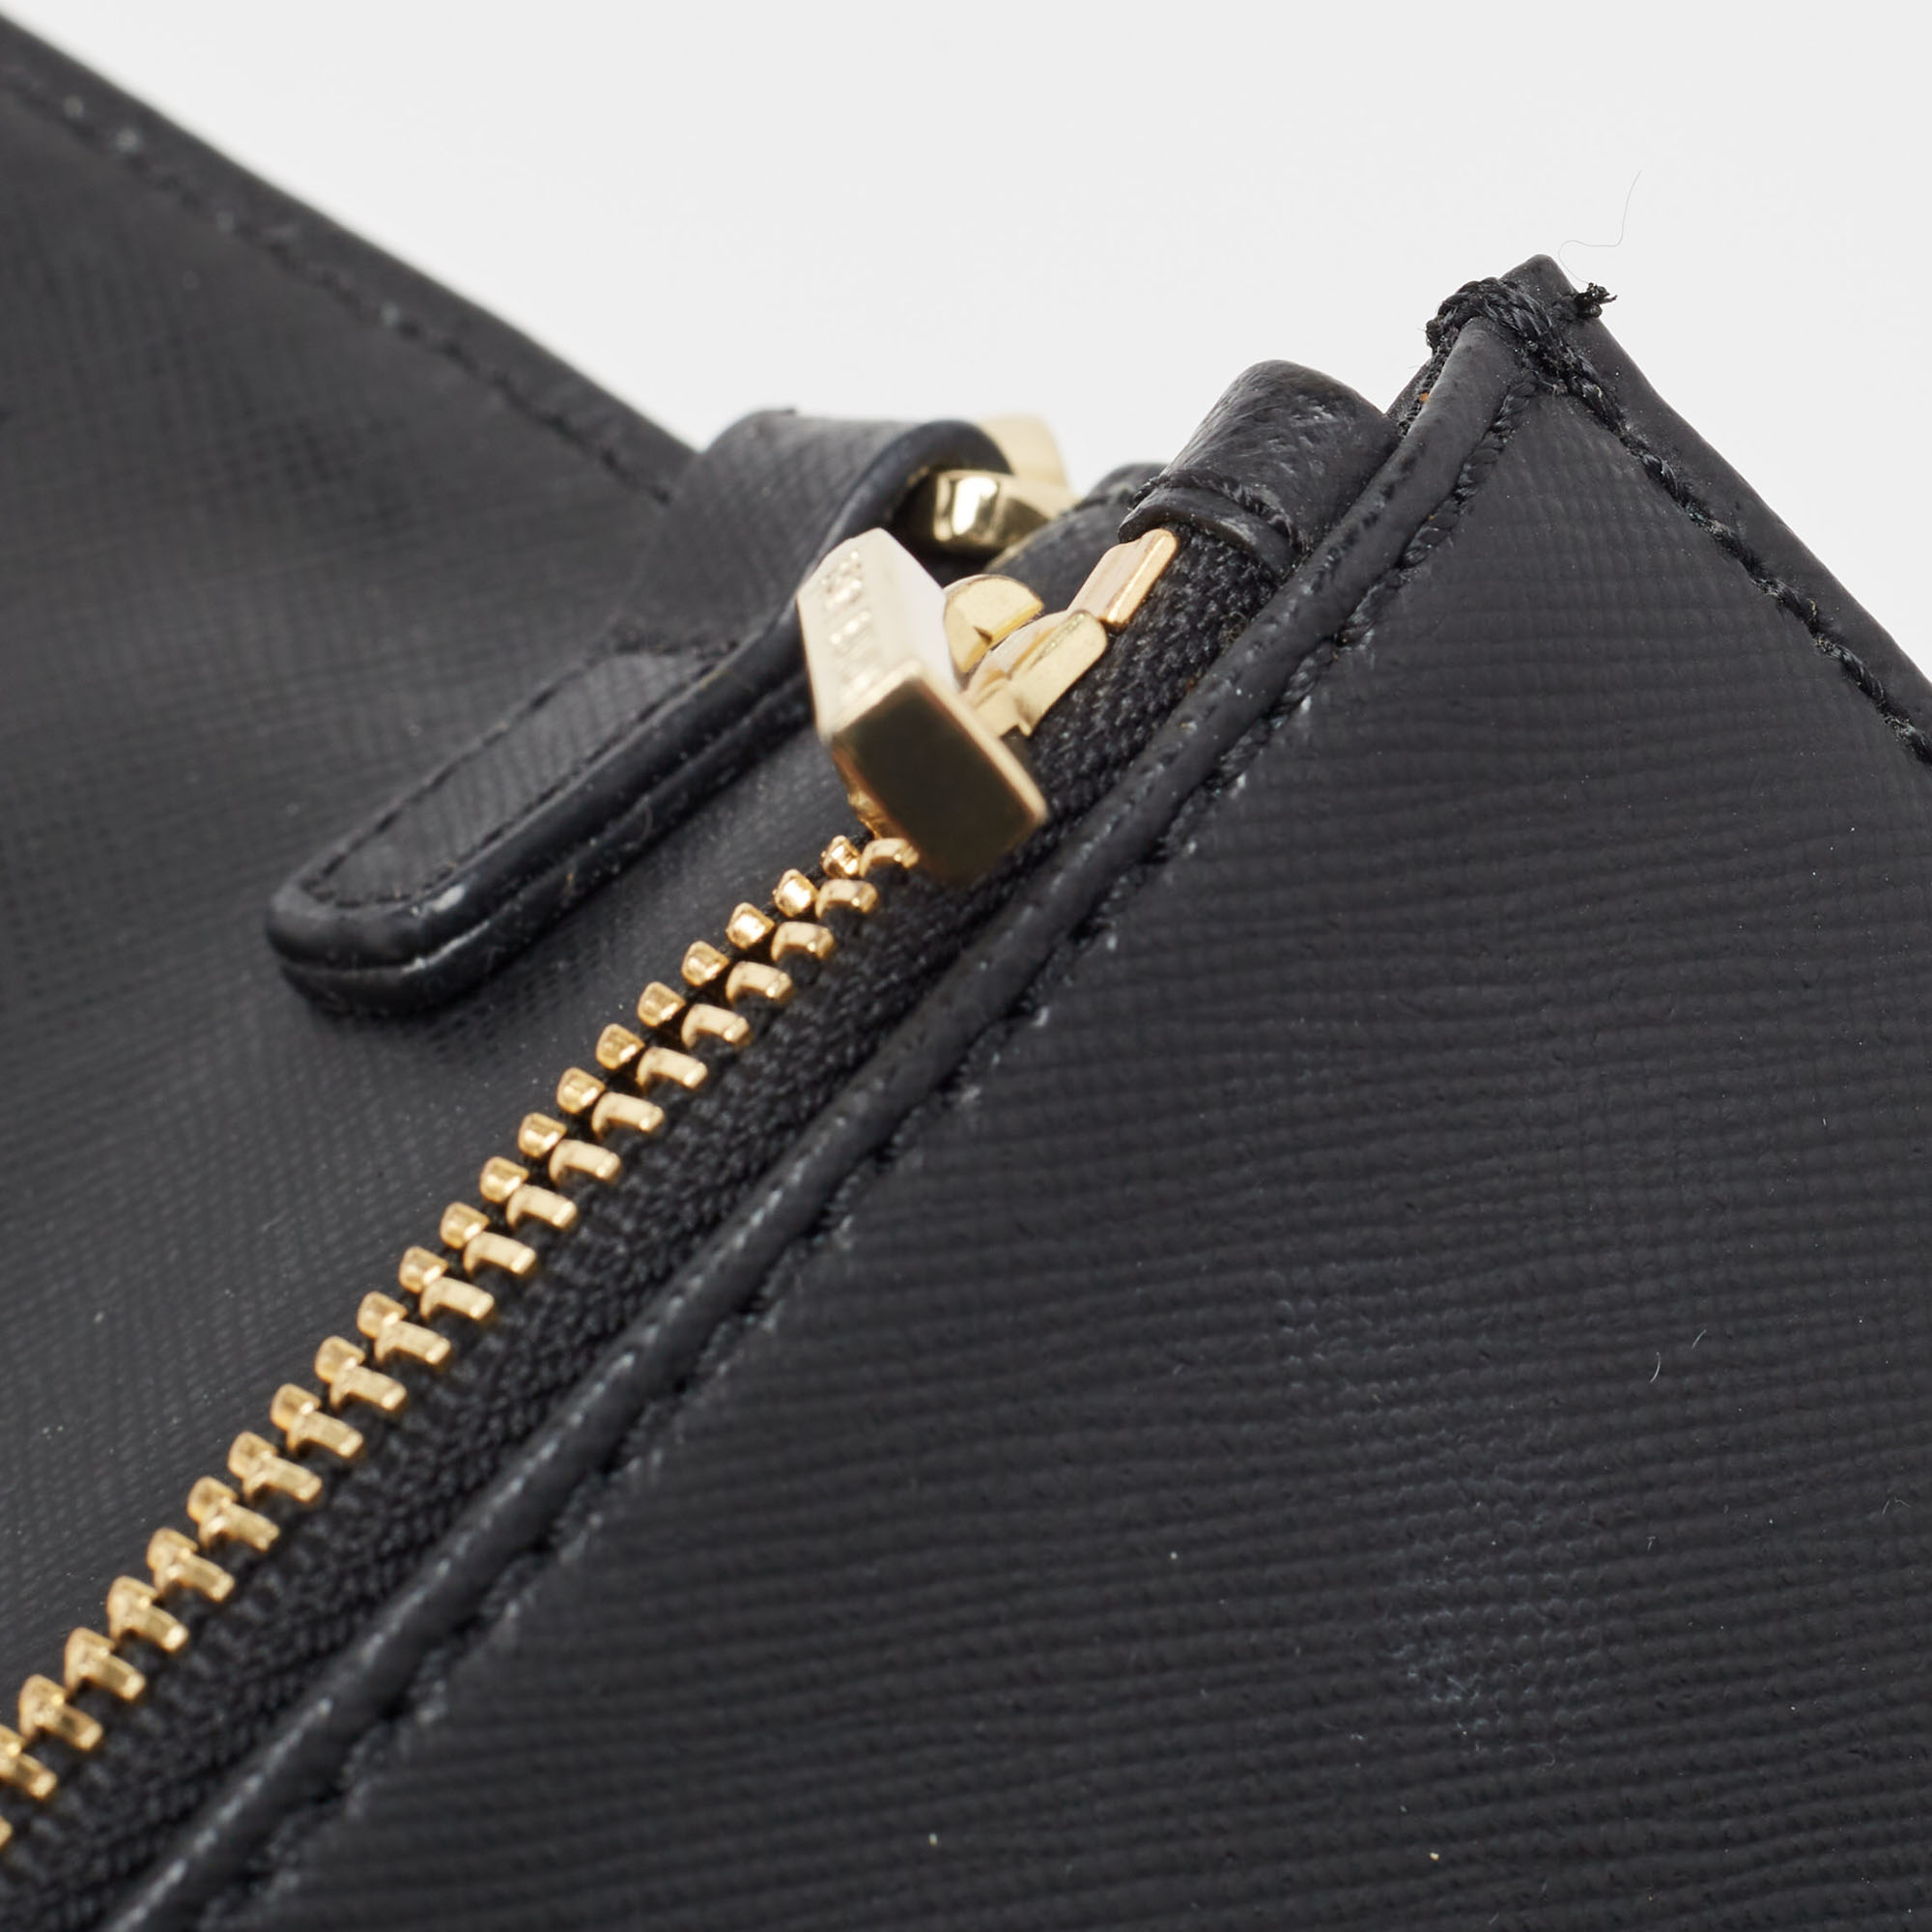 Tory Burch Black Leather Robinson Chain Clutch Bag